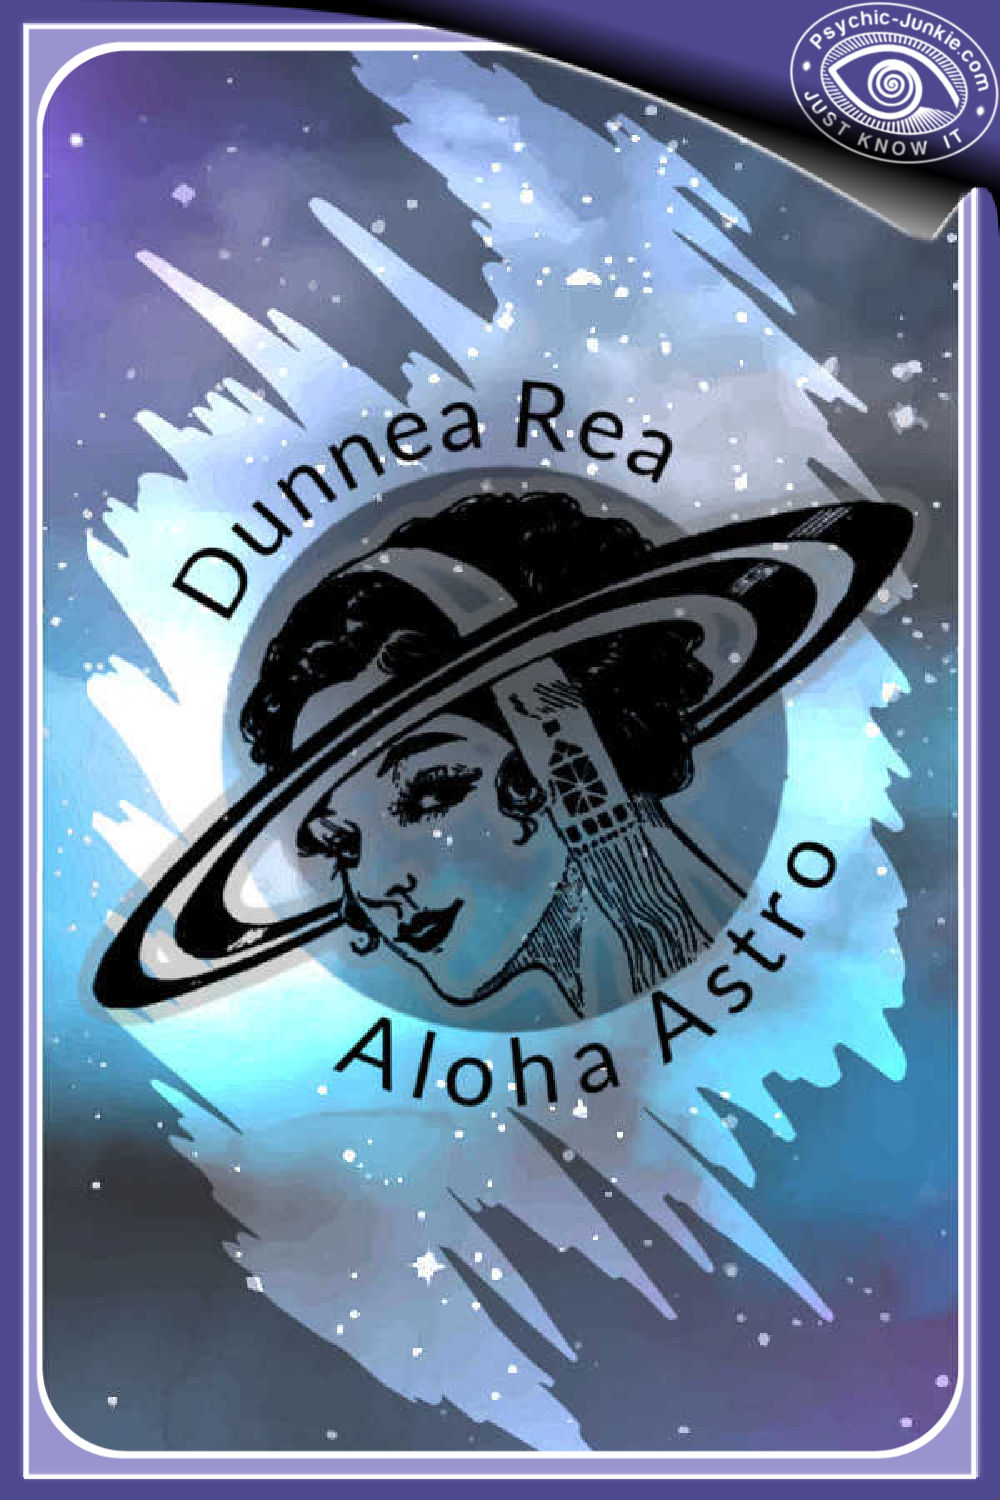 The Psychic Interviews - Astrologer Dunnea Rae Of Aloha Astro